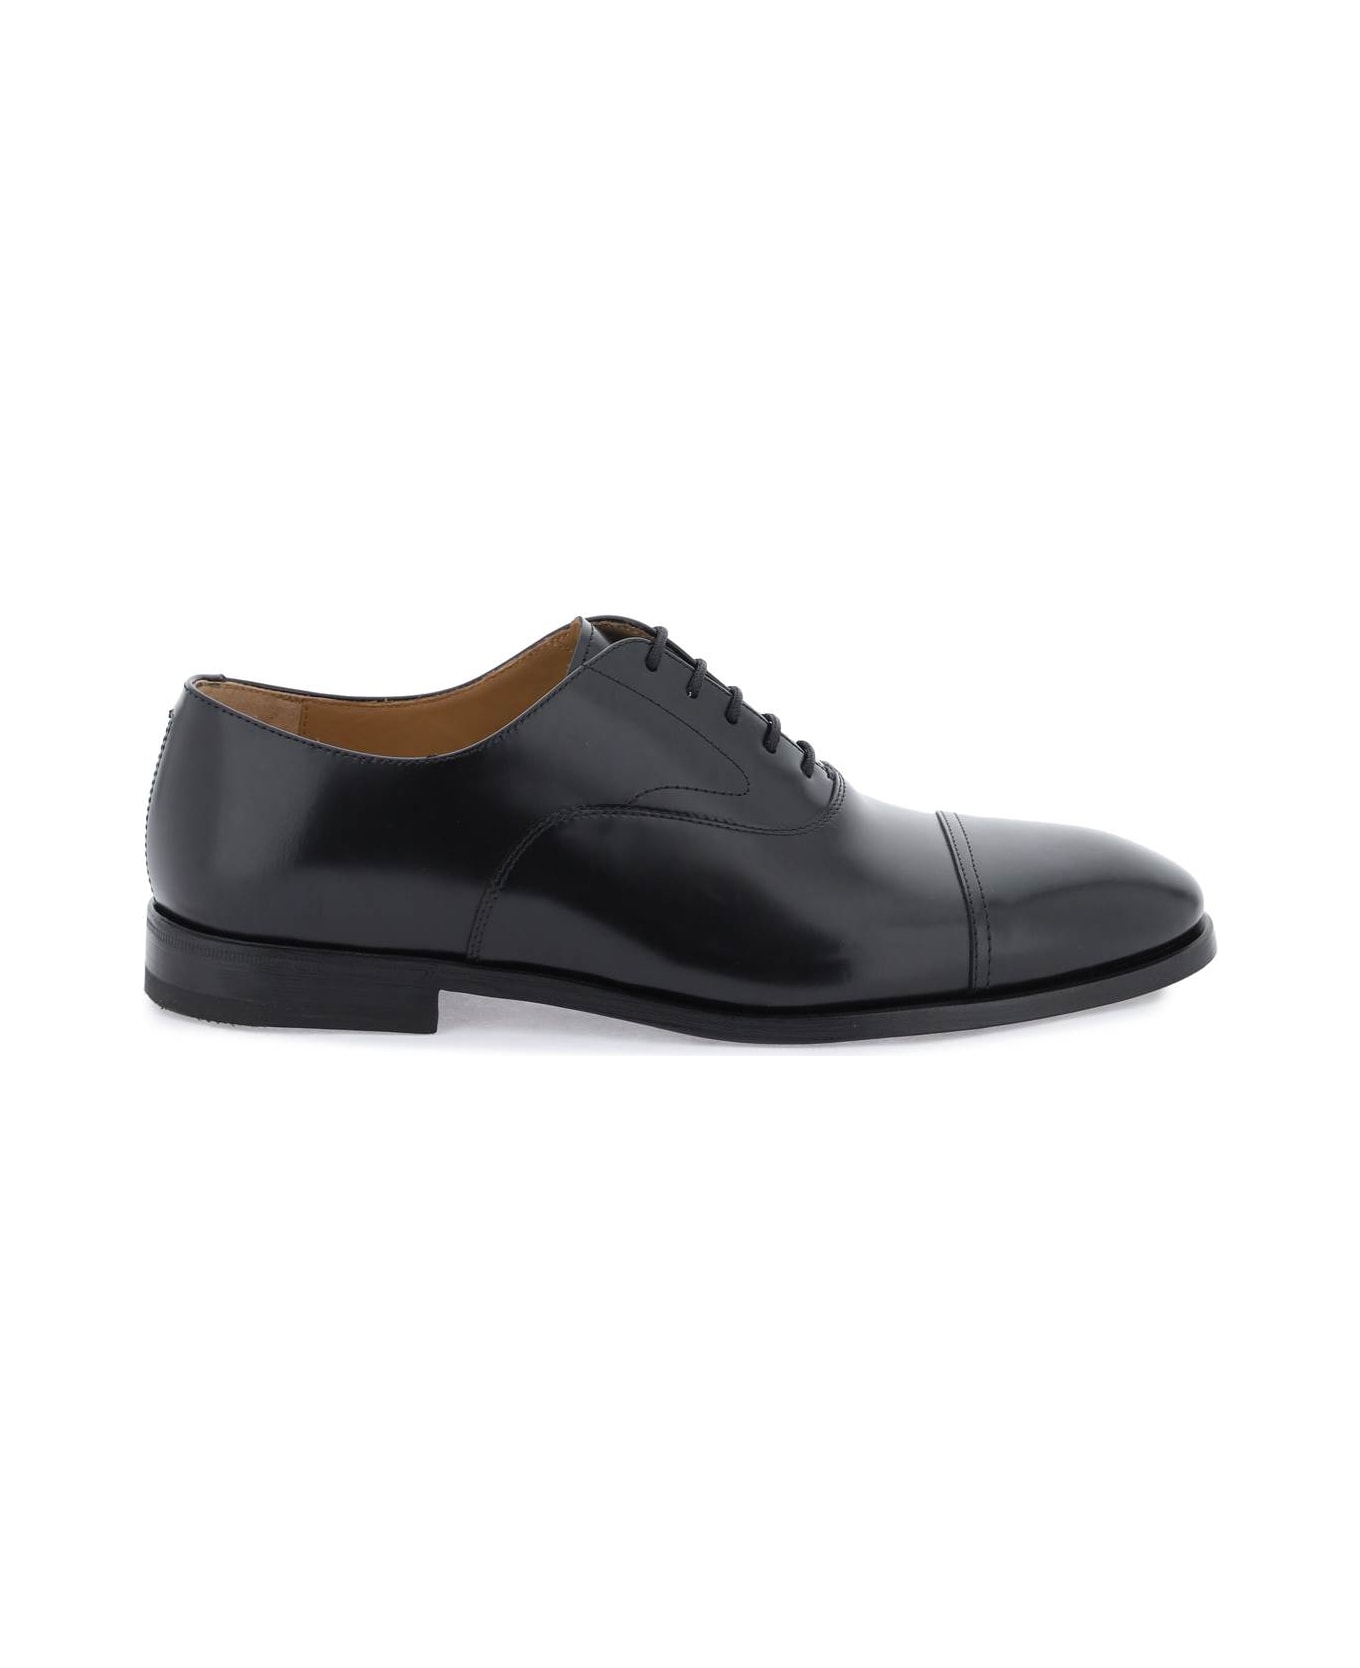 Henderson Baracco Oxford Lace-up Shoes - NERO (Black)